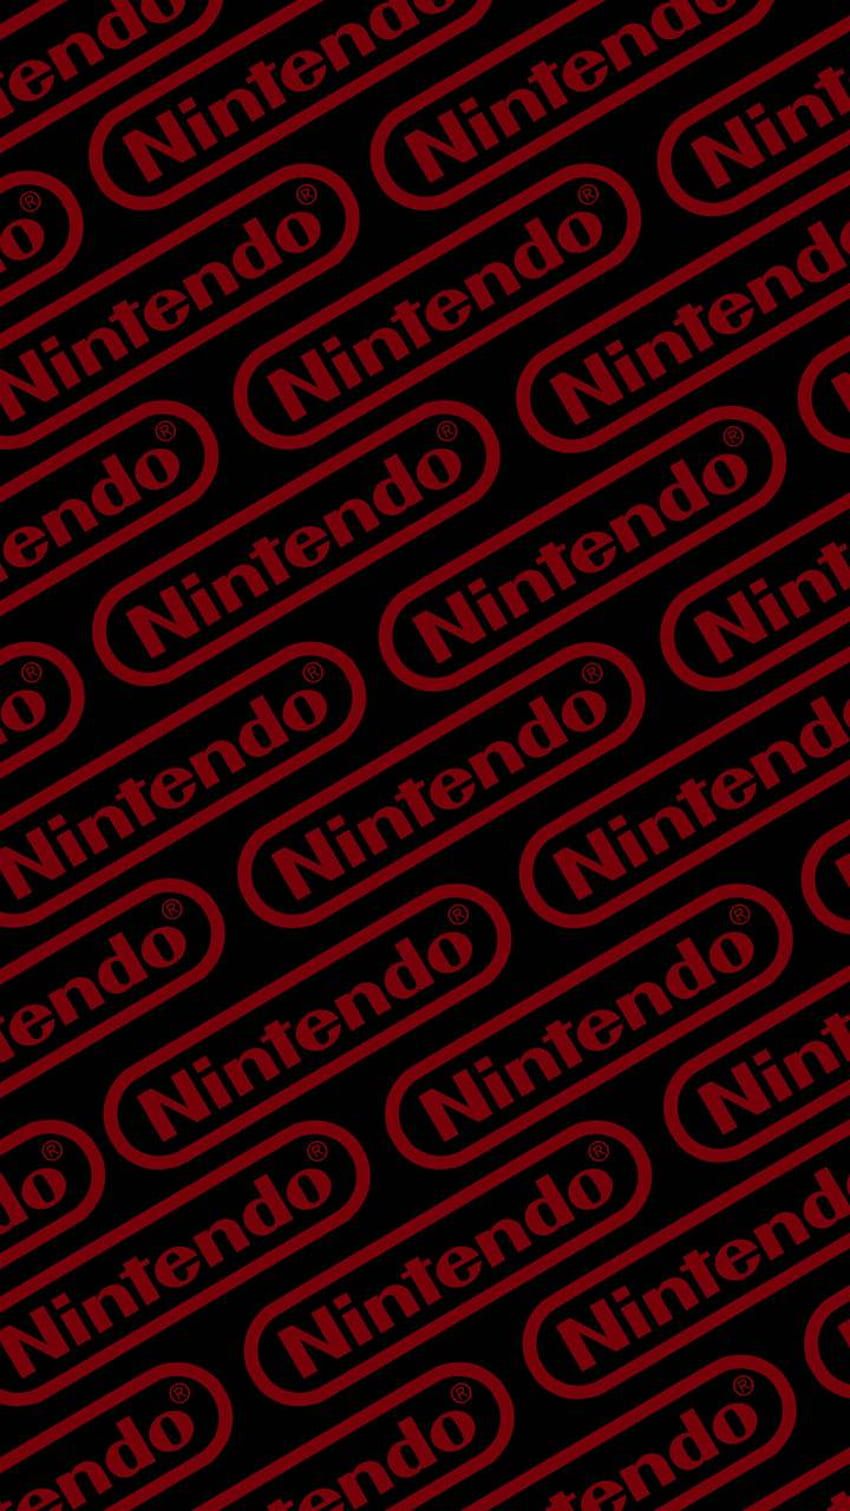 Nintendo wallpaper for your phone! - Nintendo